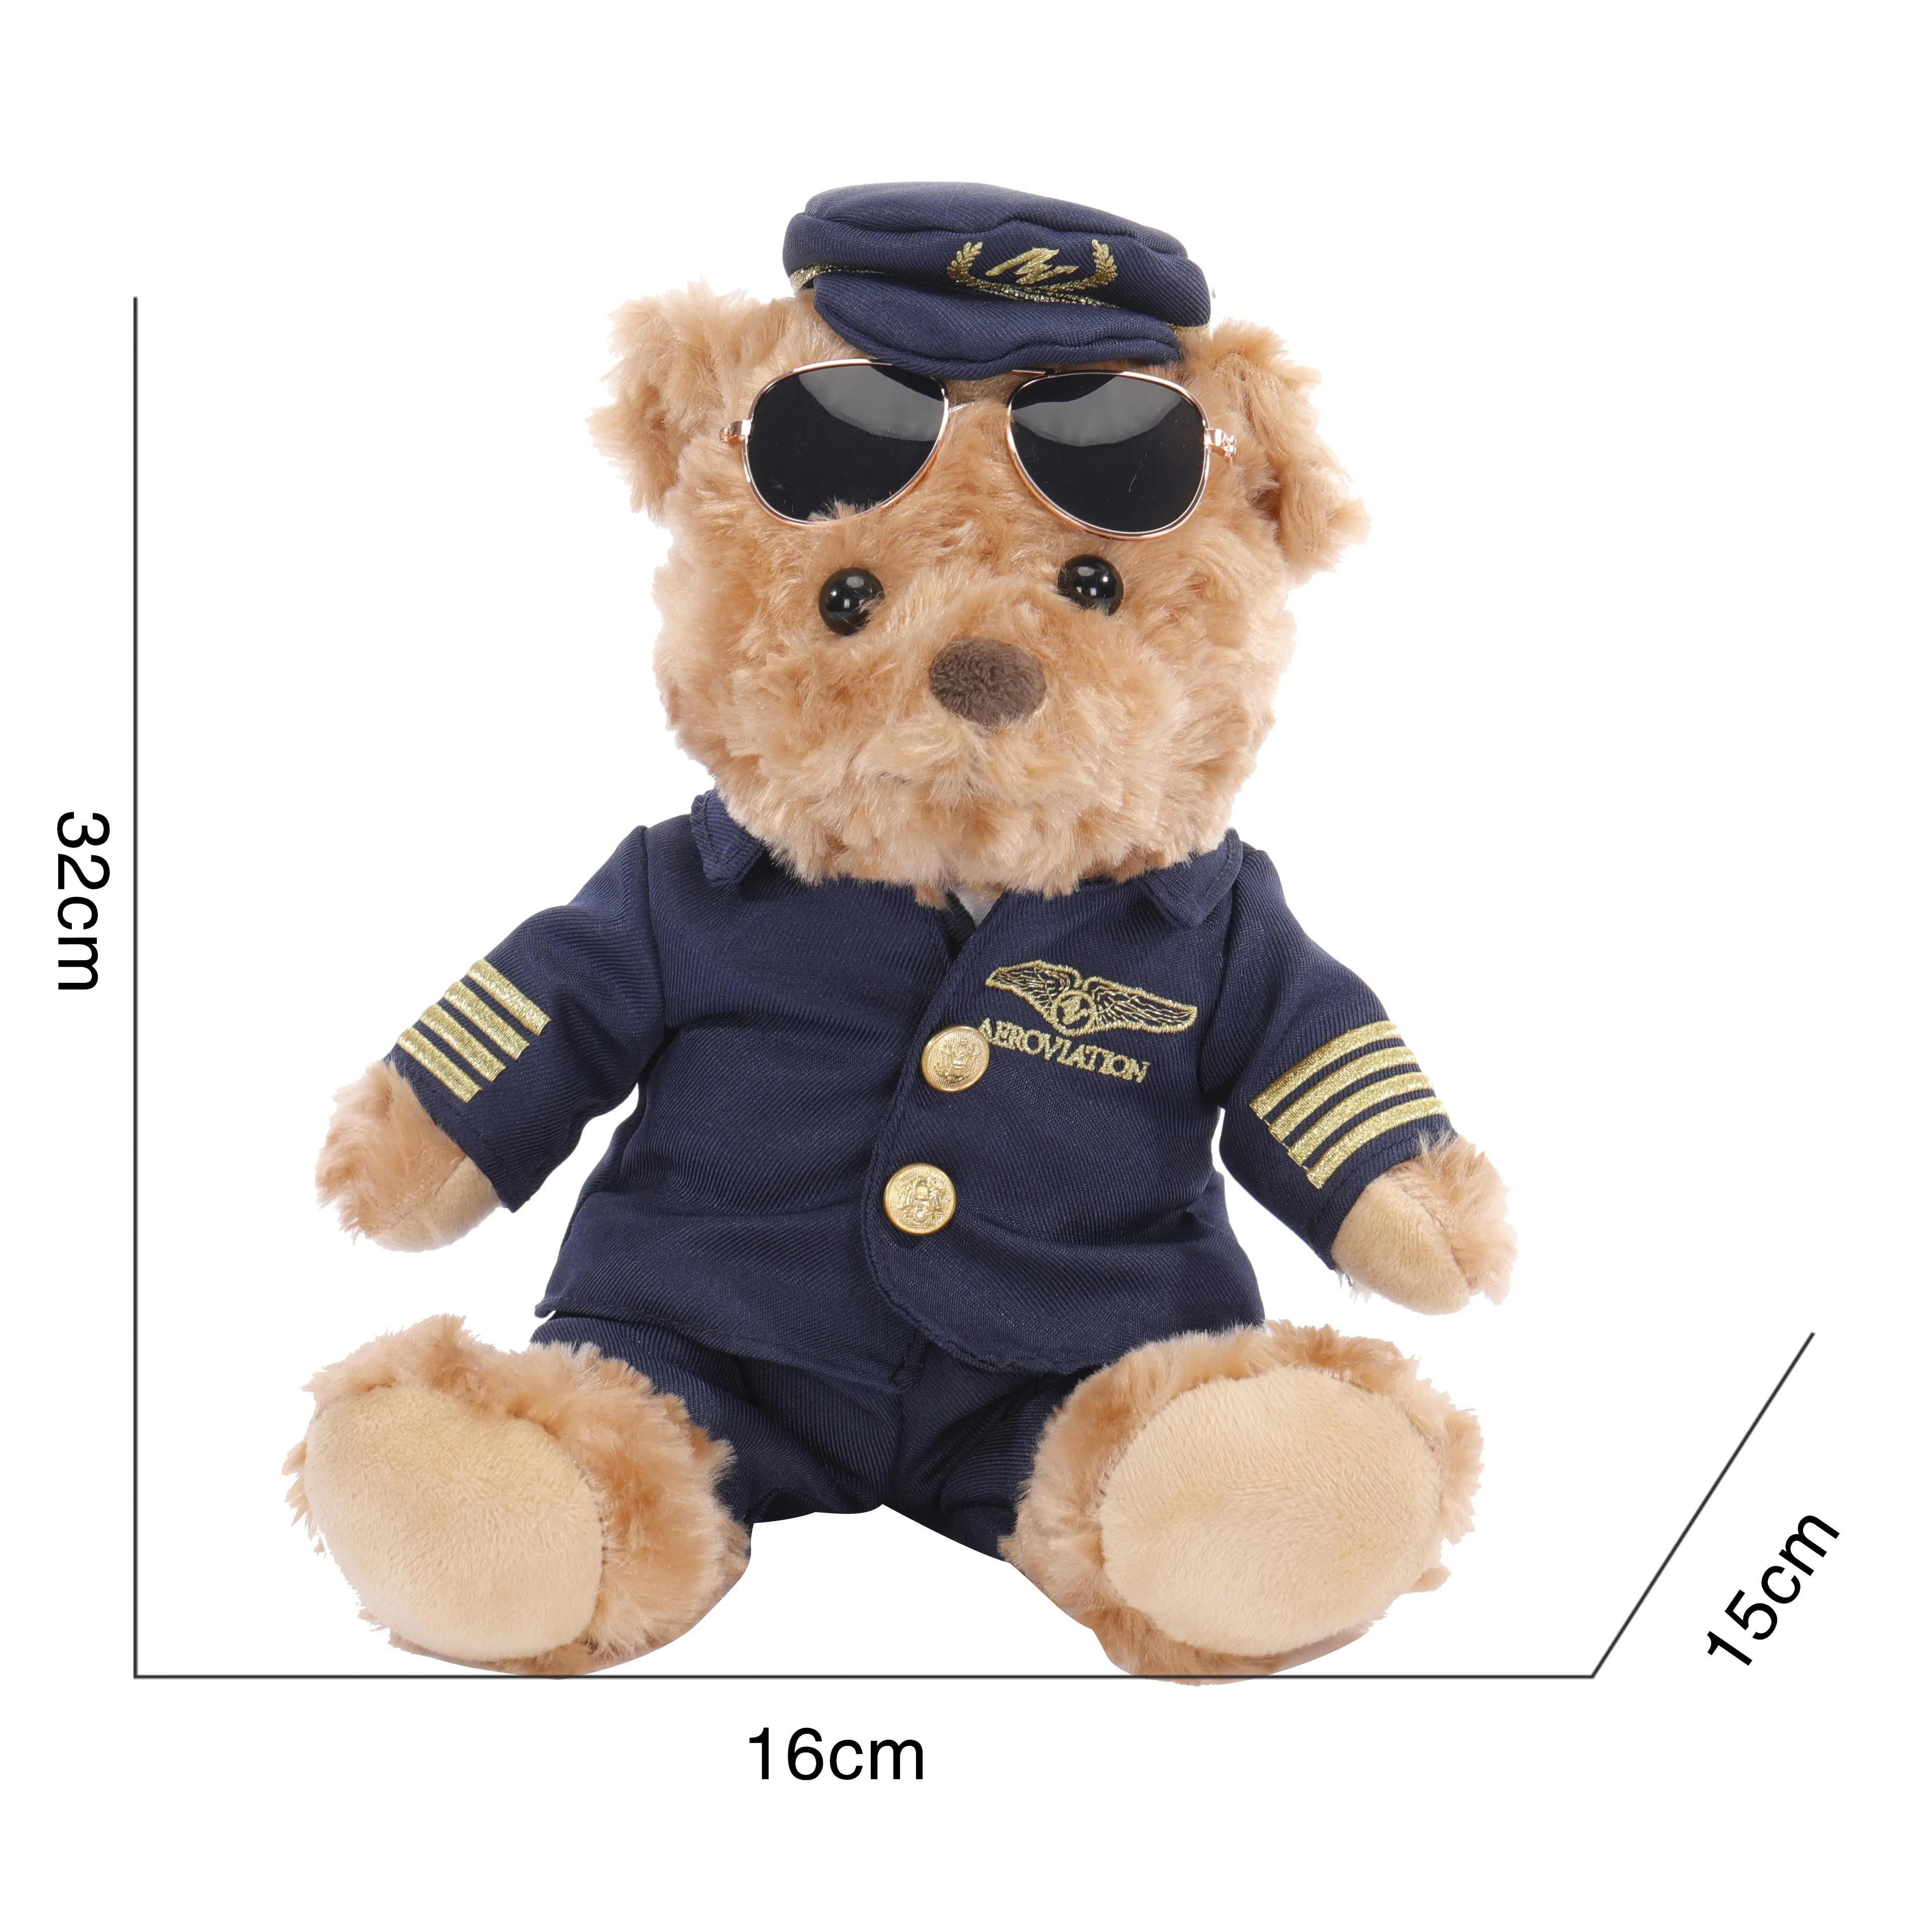 Funny aircraft commander shape stuffed teddy bear plush teddy bear